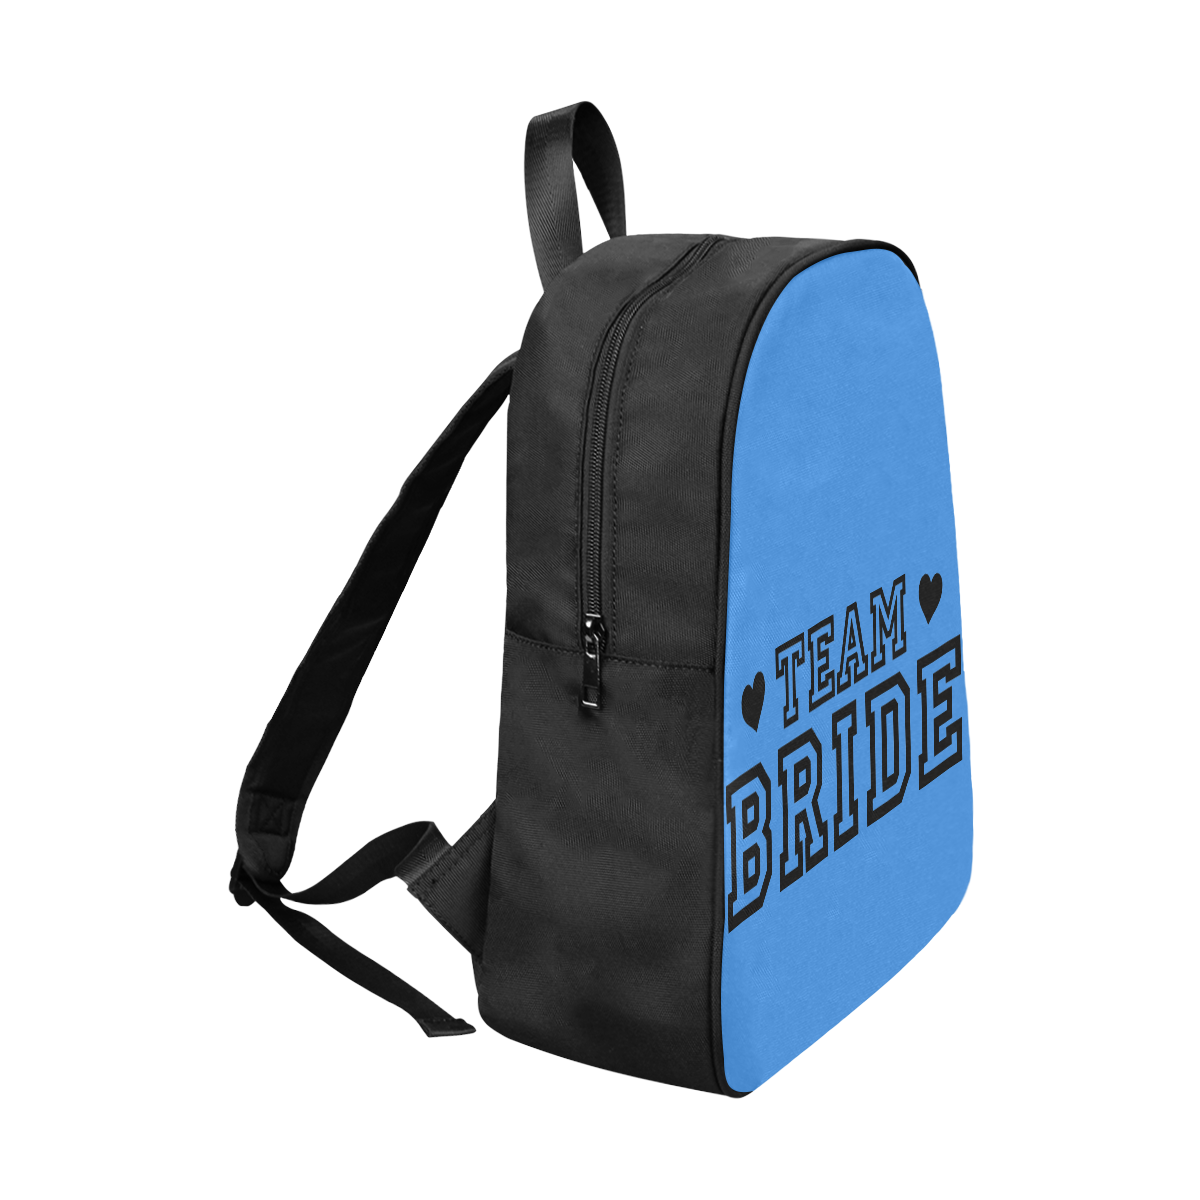 Team Bride Blue Fabric School Backpack (Model 1682) (Large)